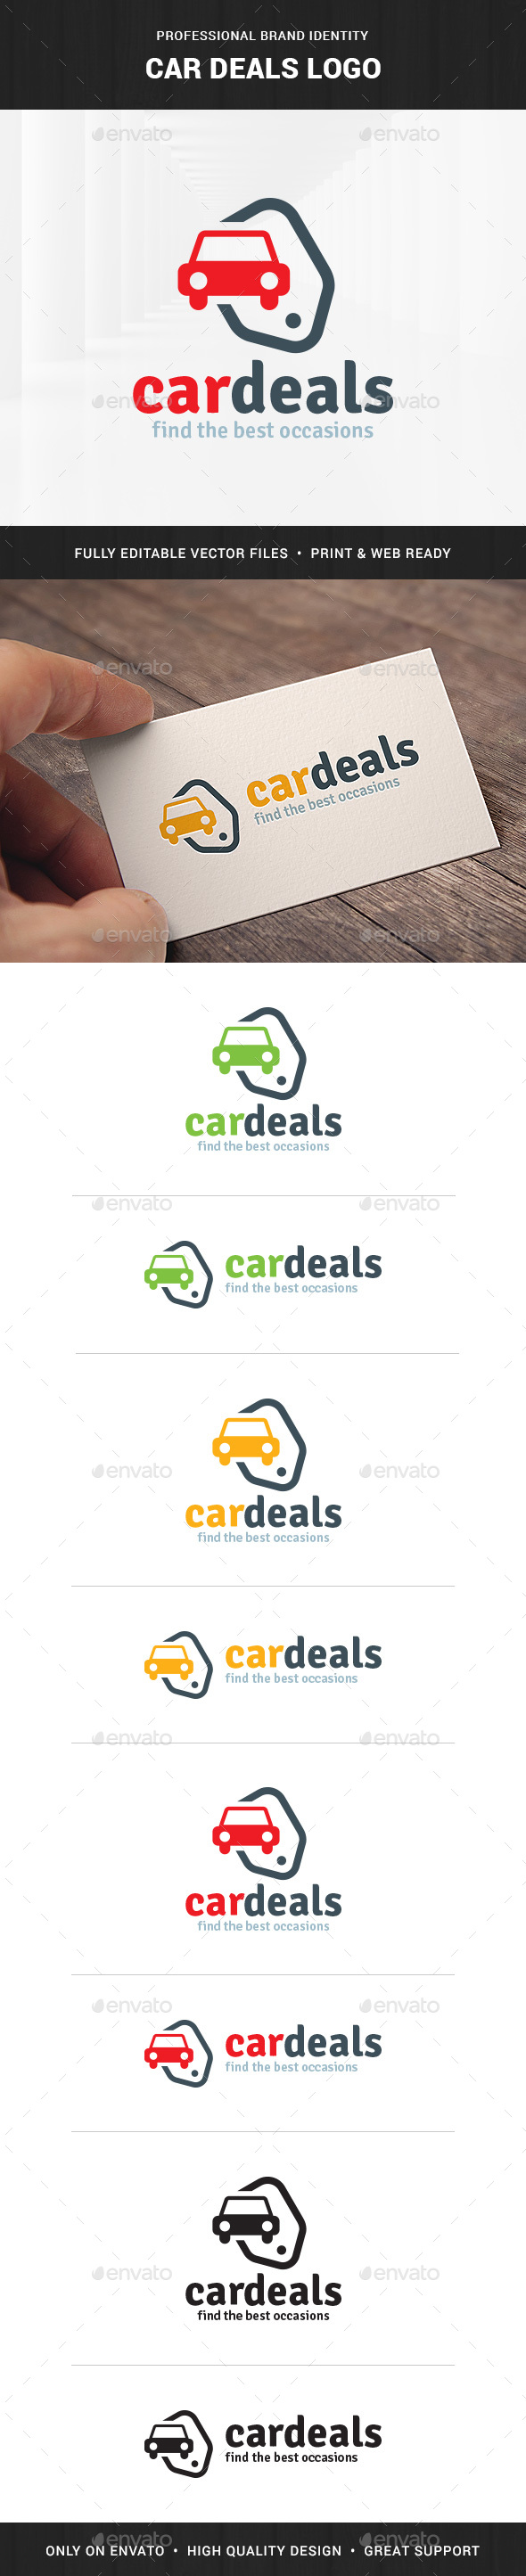 Car Deals Logo Template